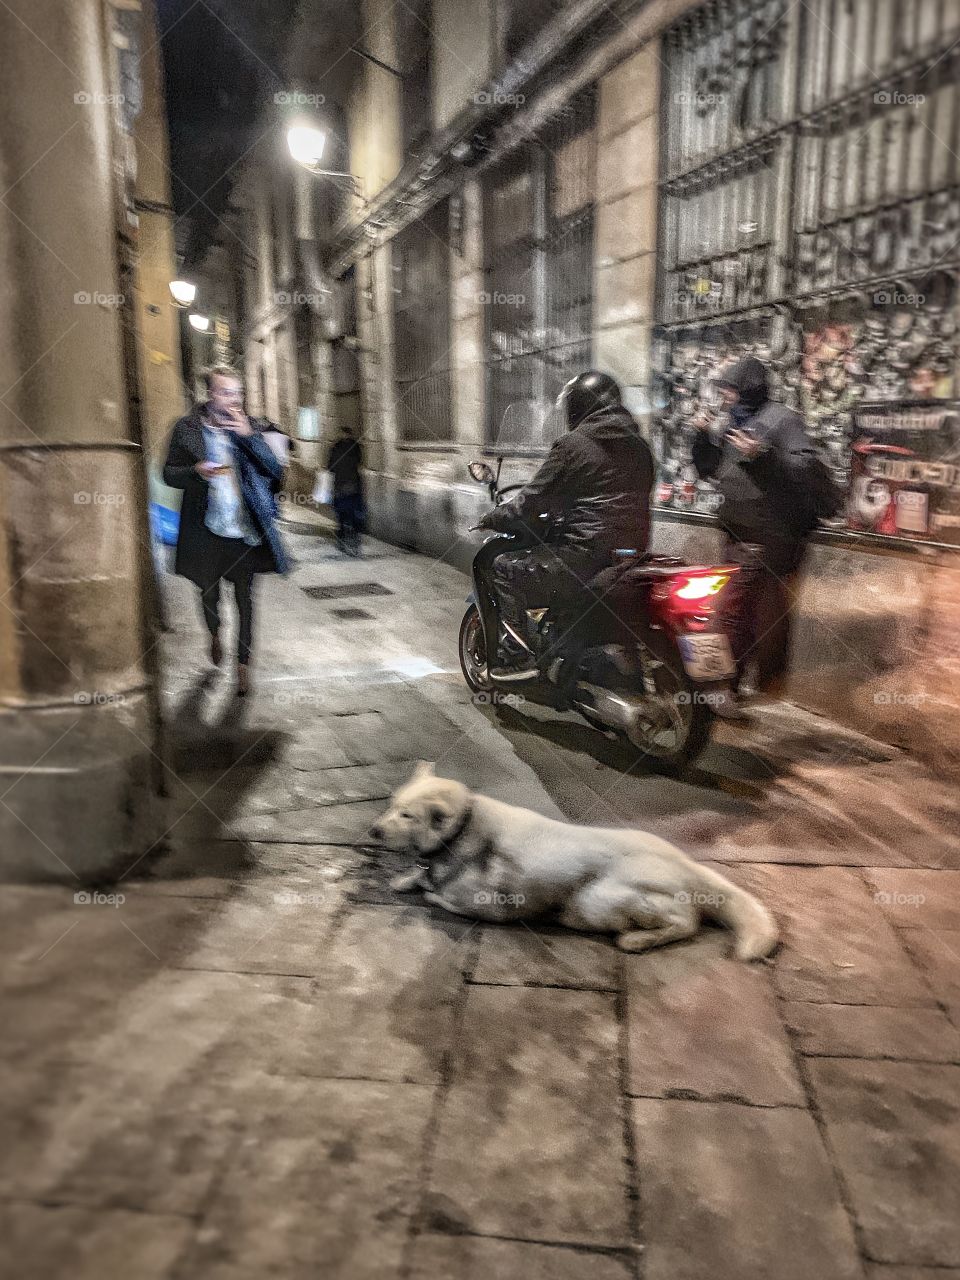 Barcelona’s streets